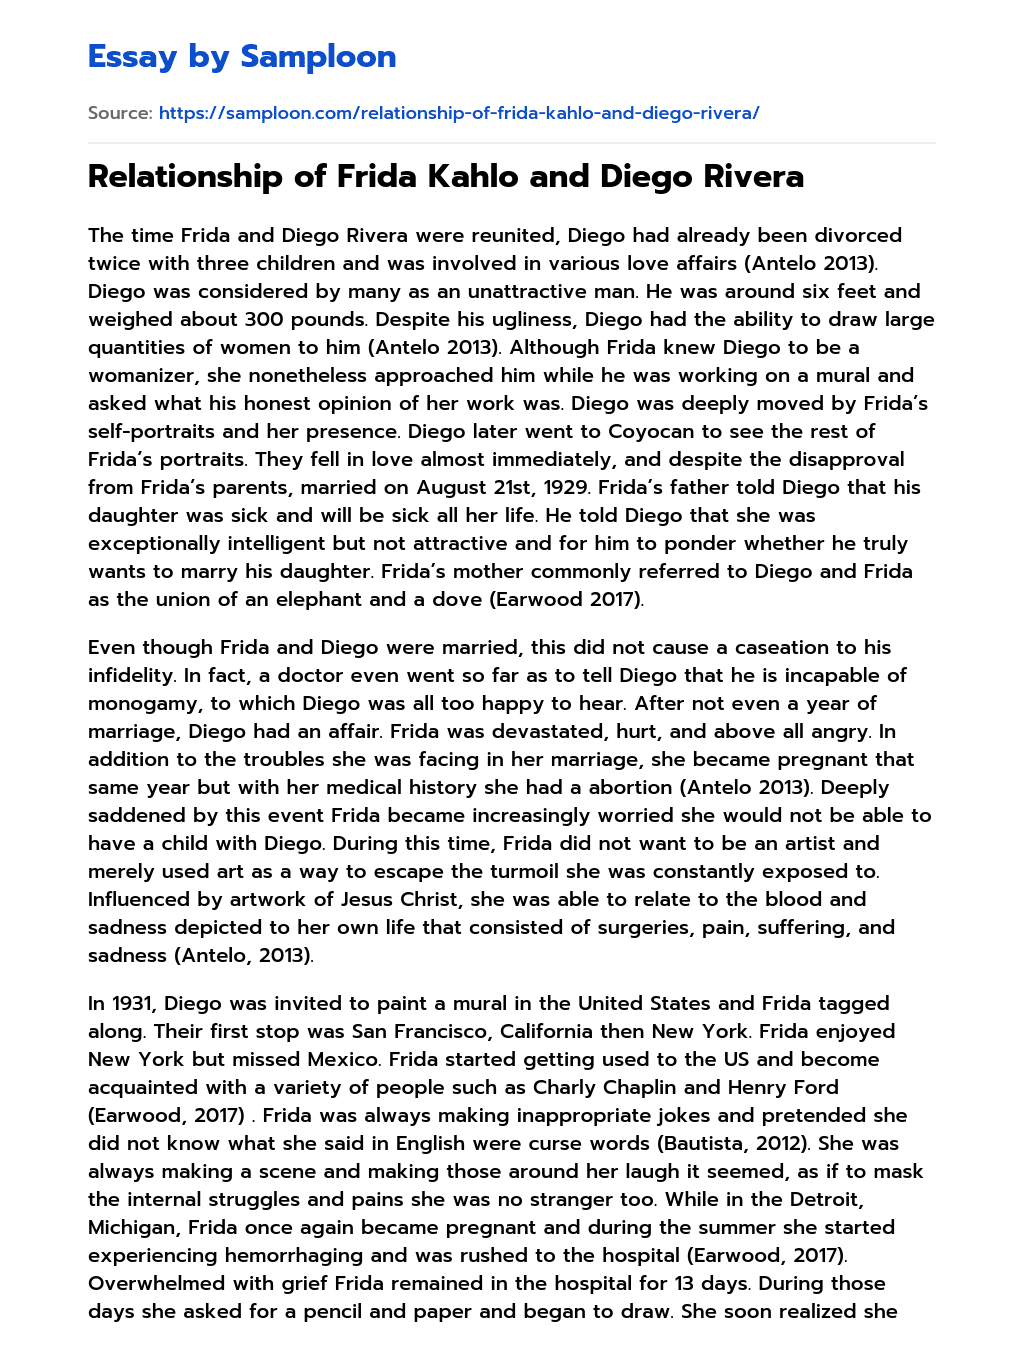 Relationship of Frida Kahlo and Diego Rivera essay